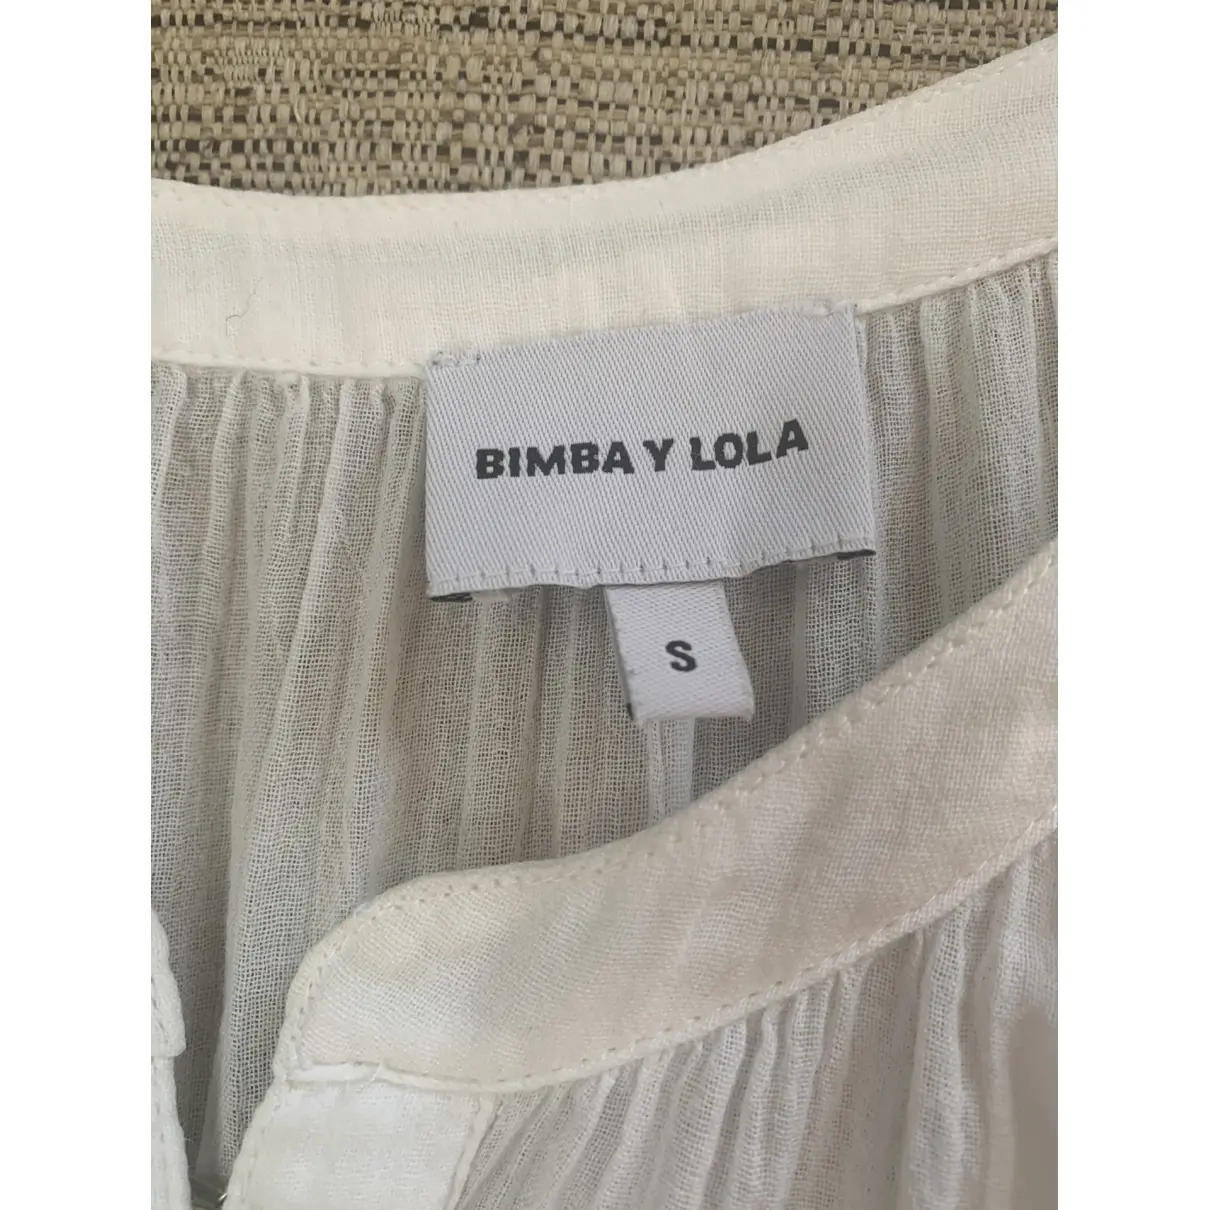 Buy Bimba y Lola Blouse online